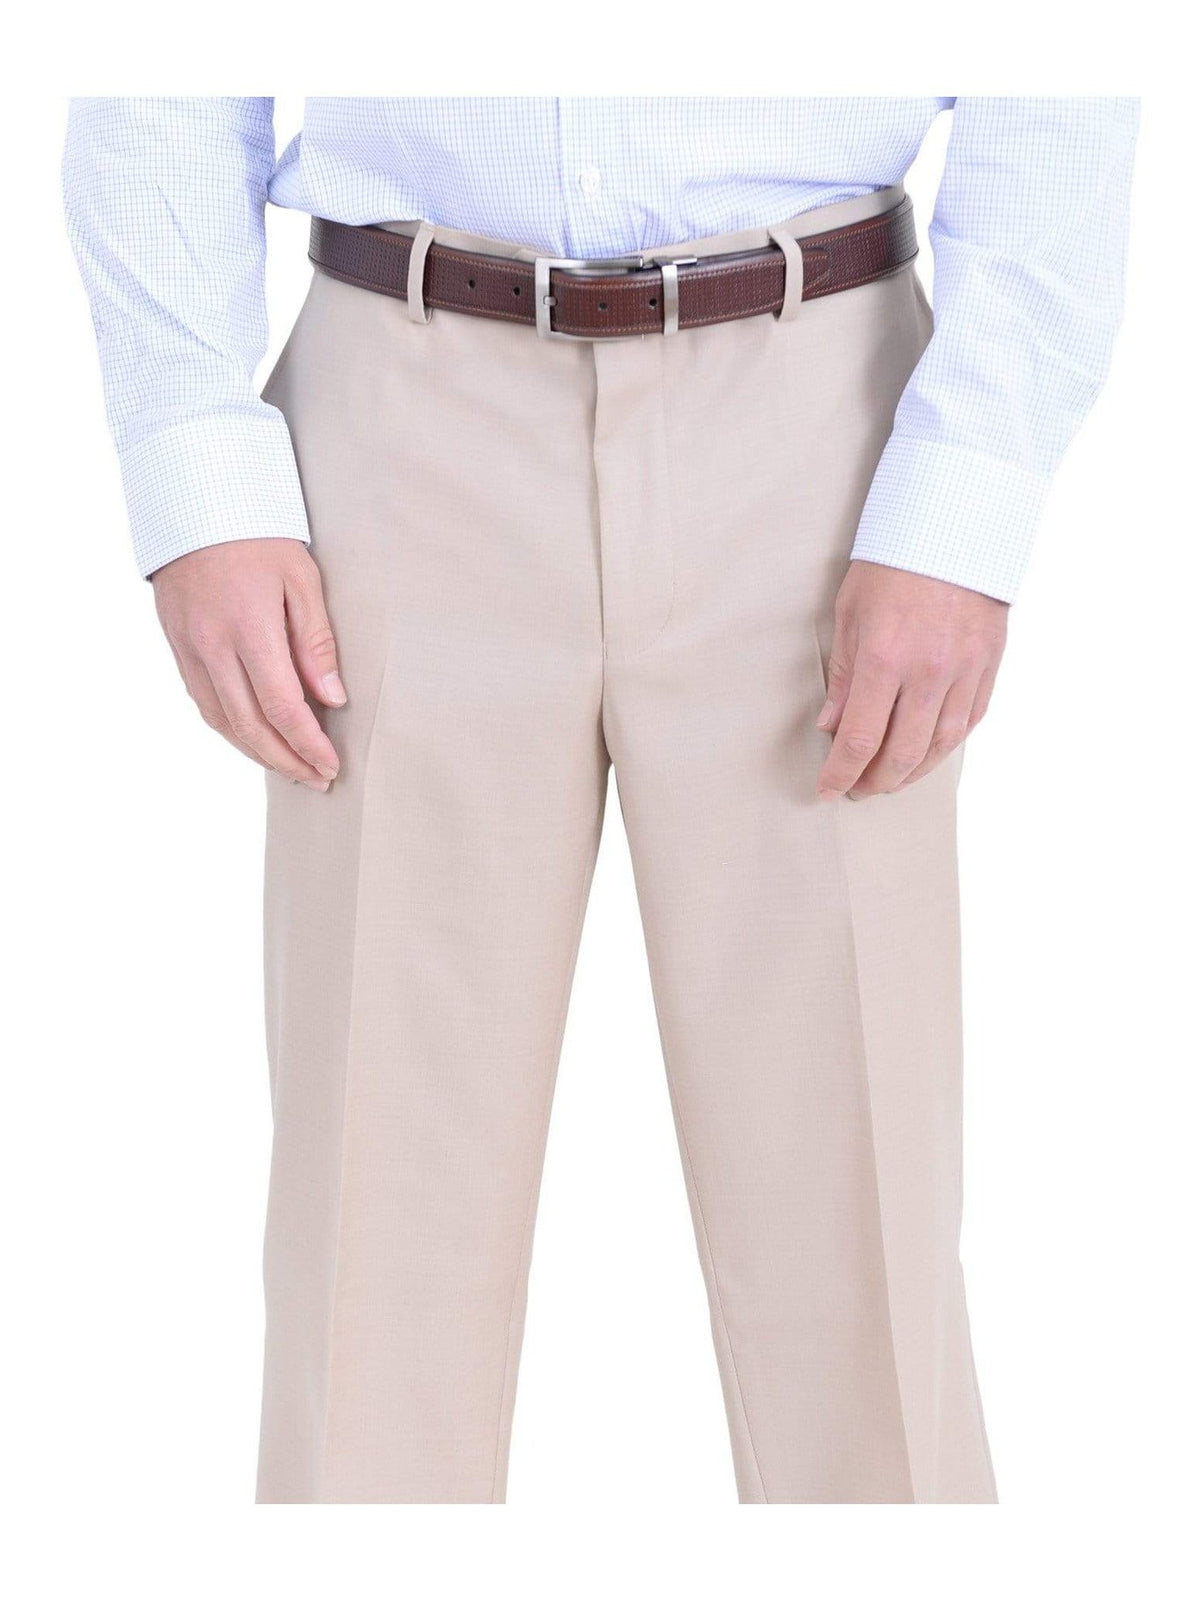 Private Label M PANTS 38W Mens Classic Fit Solid Light Tan Flat Front Wool Dress Pants